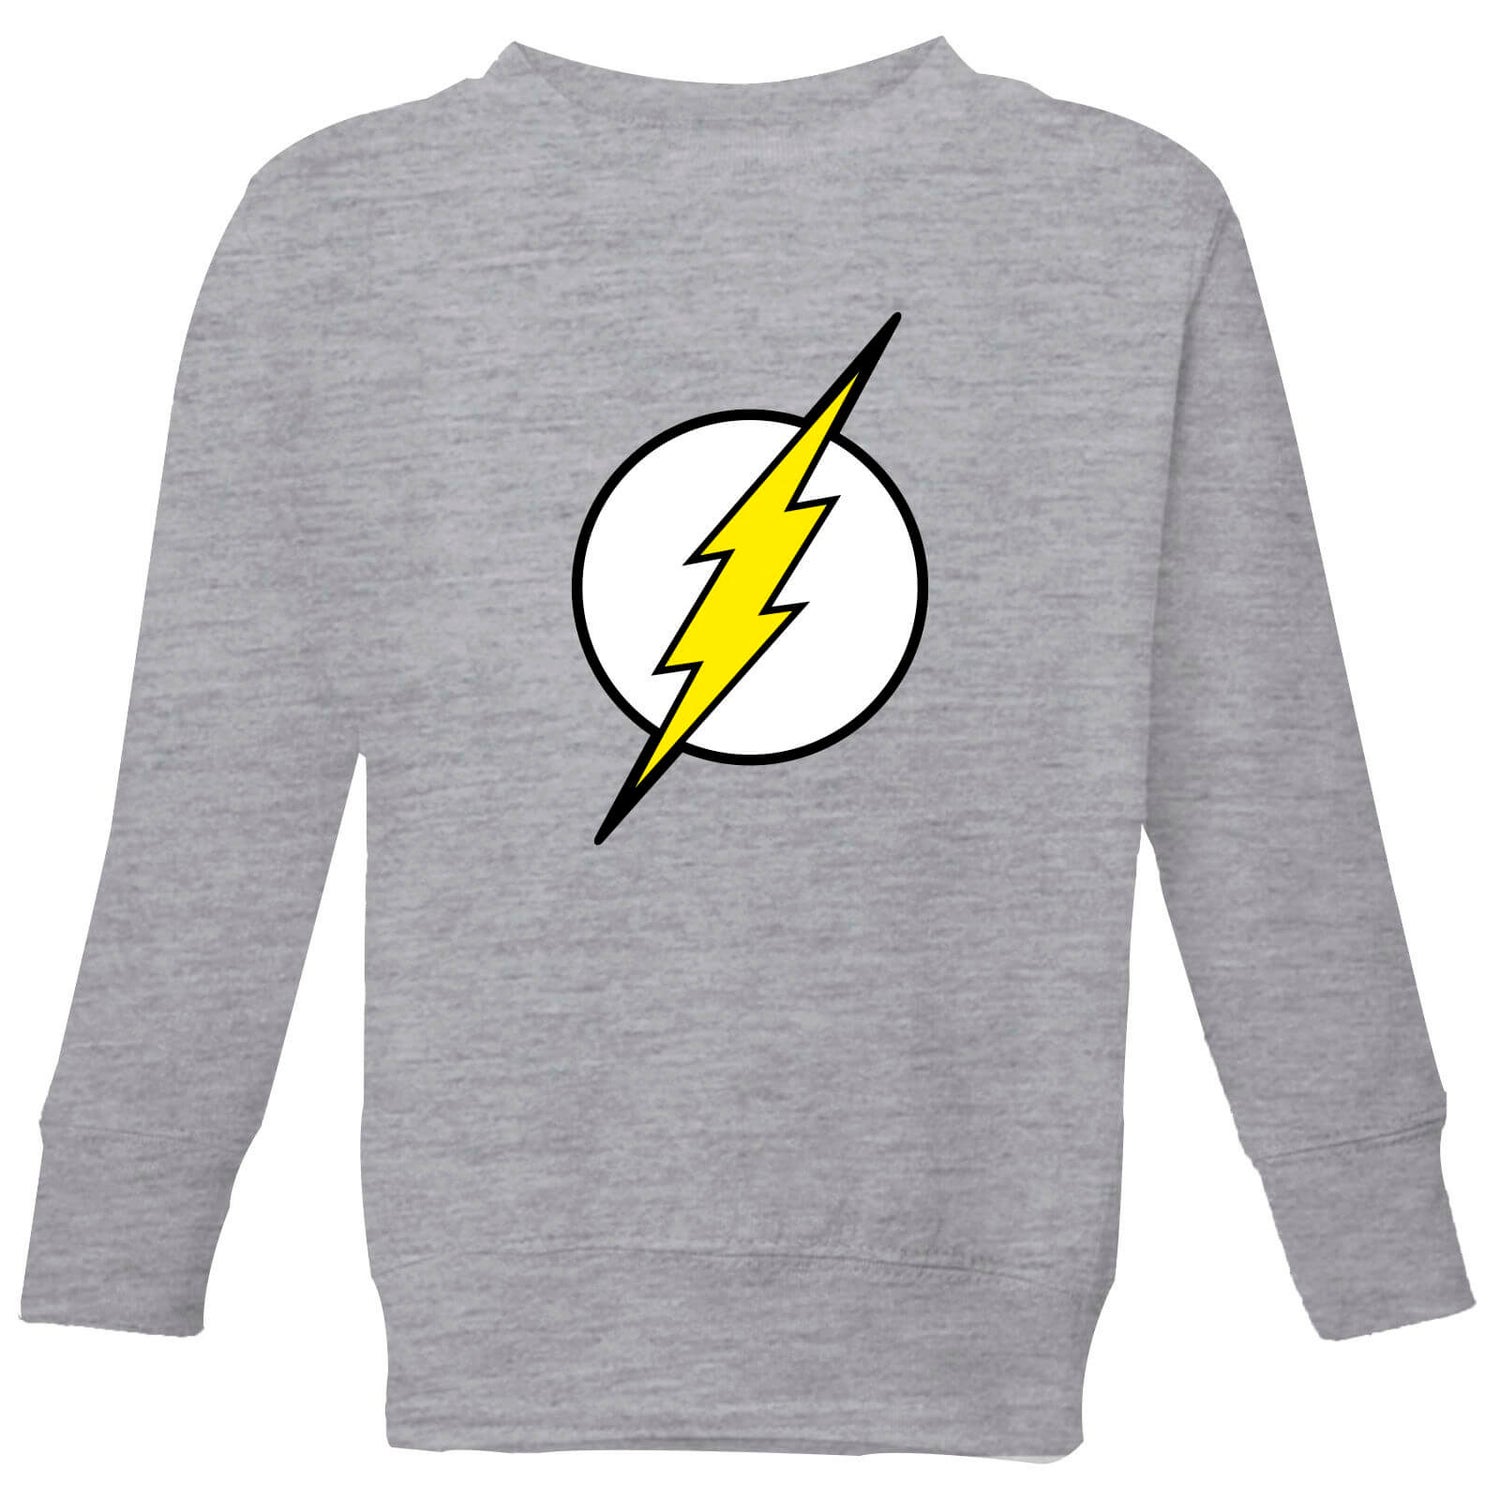 Justice League Flash Logo Kids' Sweatshirt - Grey